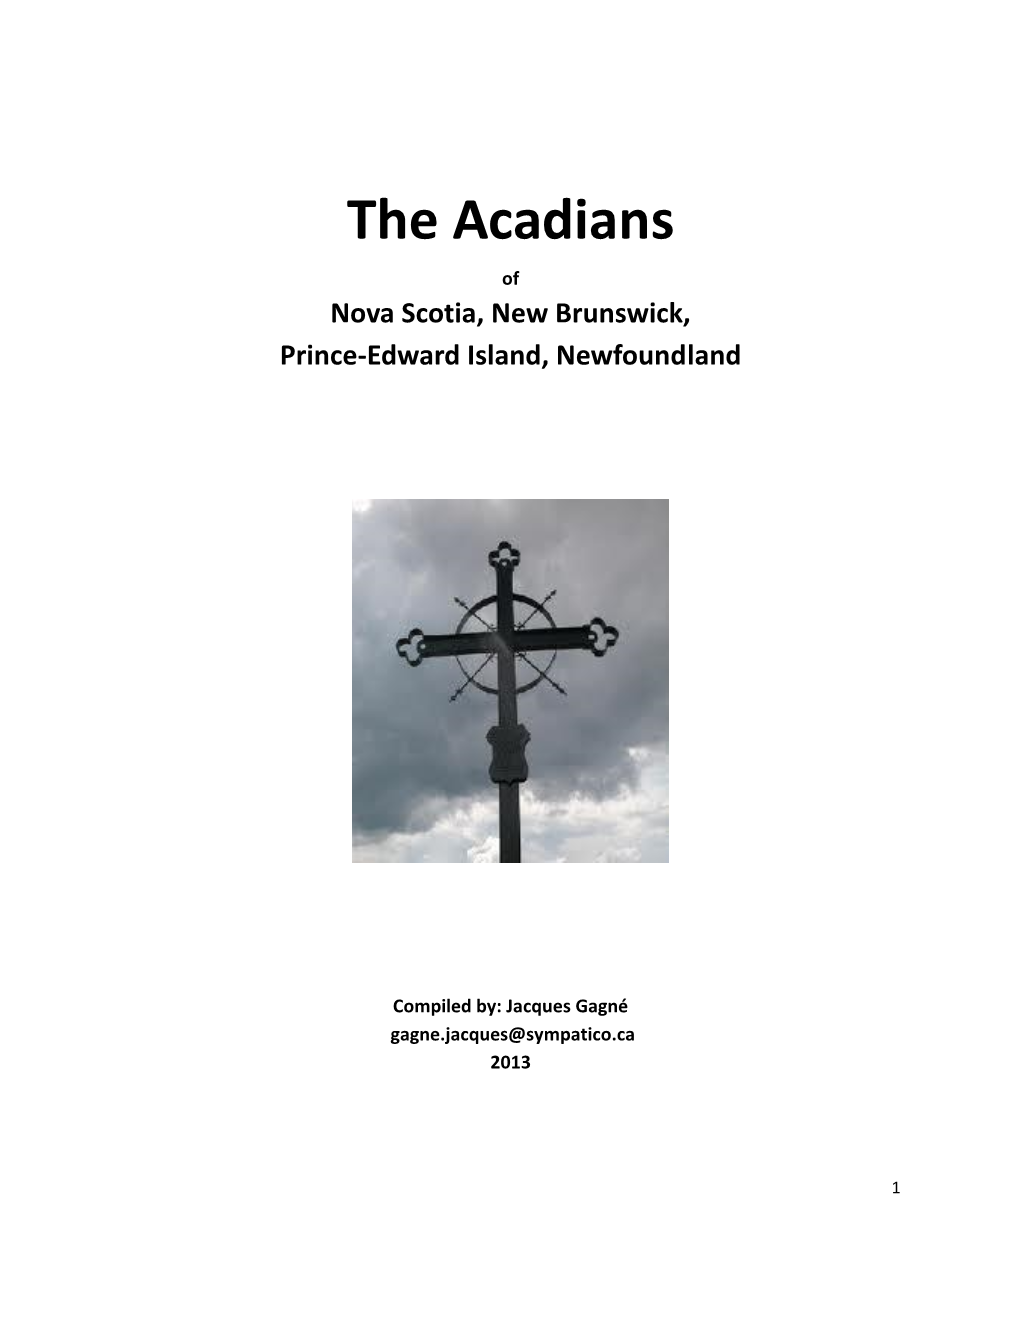 The Acadians of Nova Scotia, New Brunswick, Prince-Edward Island, Newfoundland